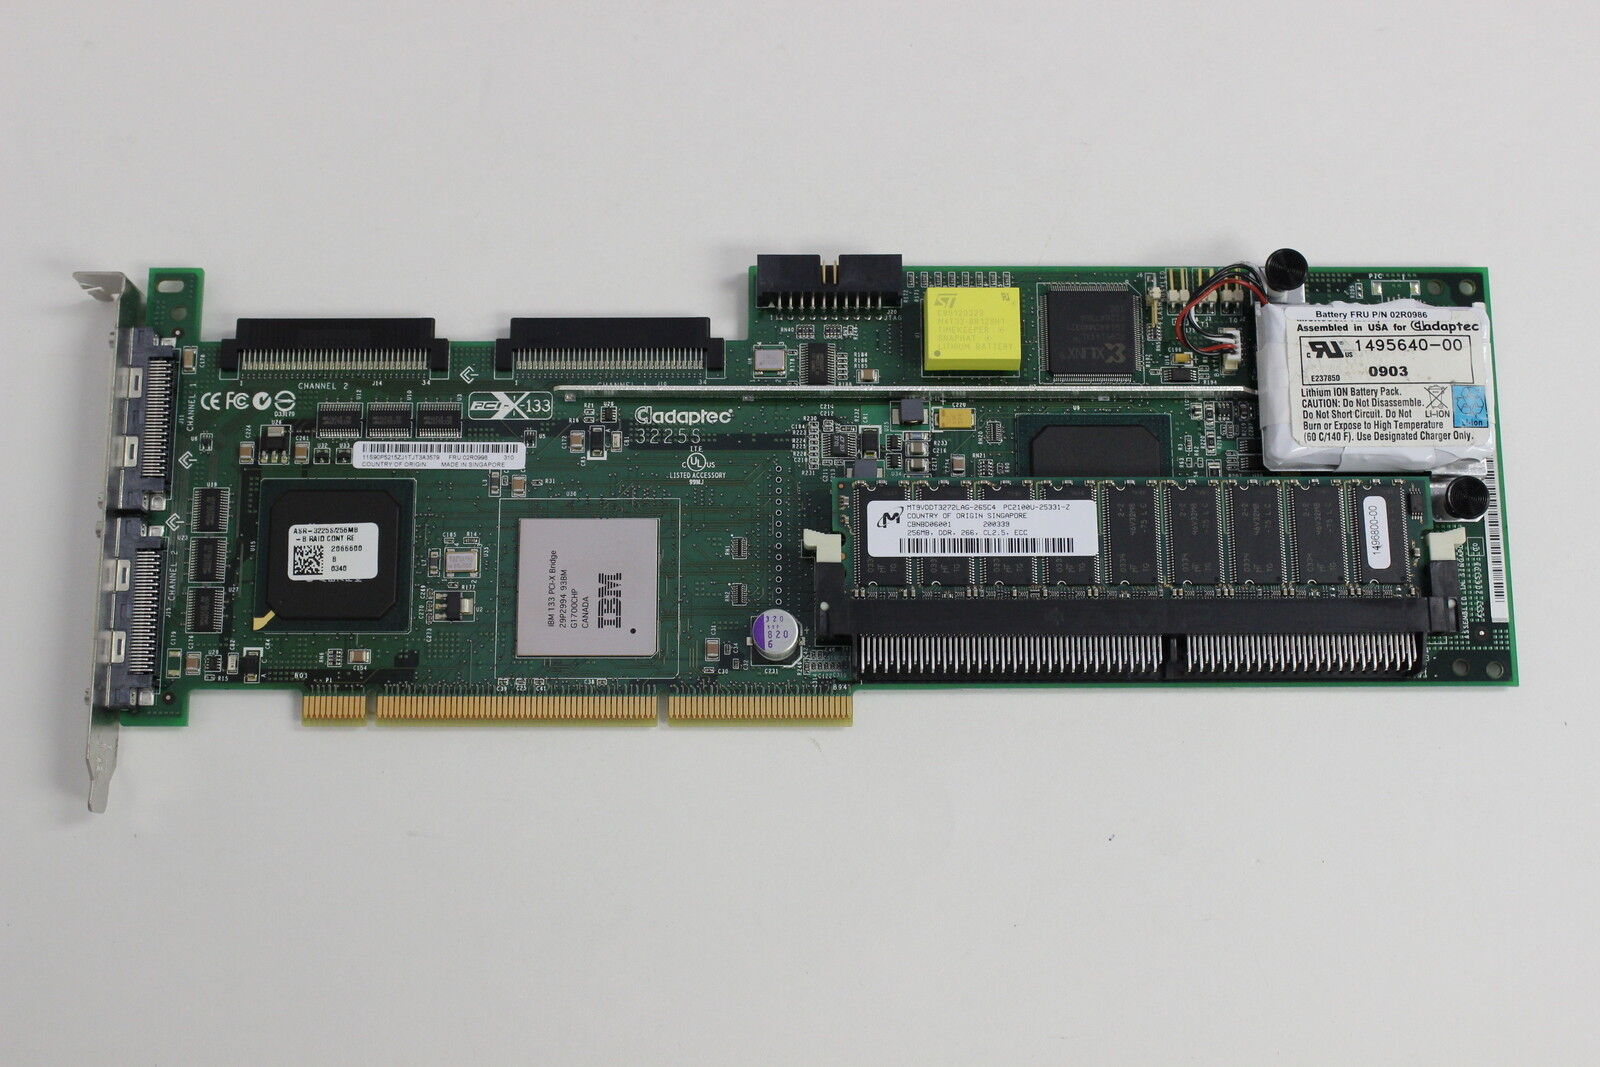 IBM 02R0998 PCI-X-133 6M RAID CONTROLLER ADAPTER BOARD